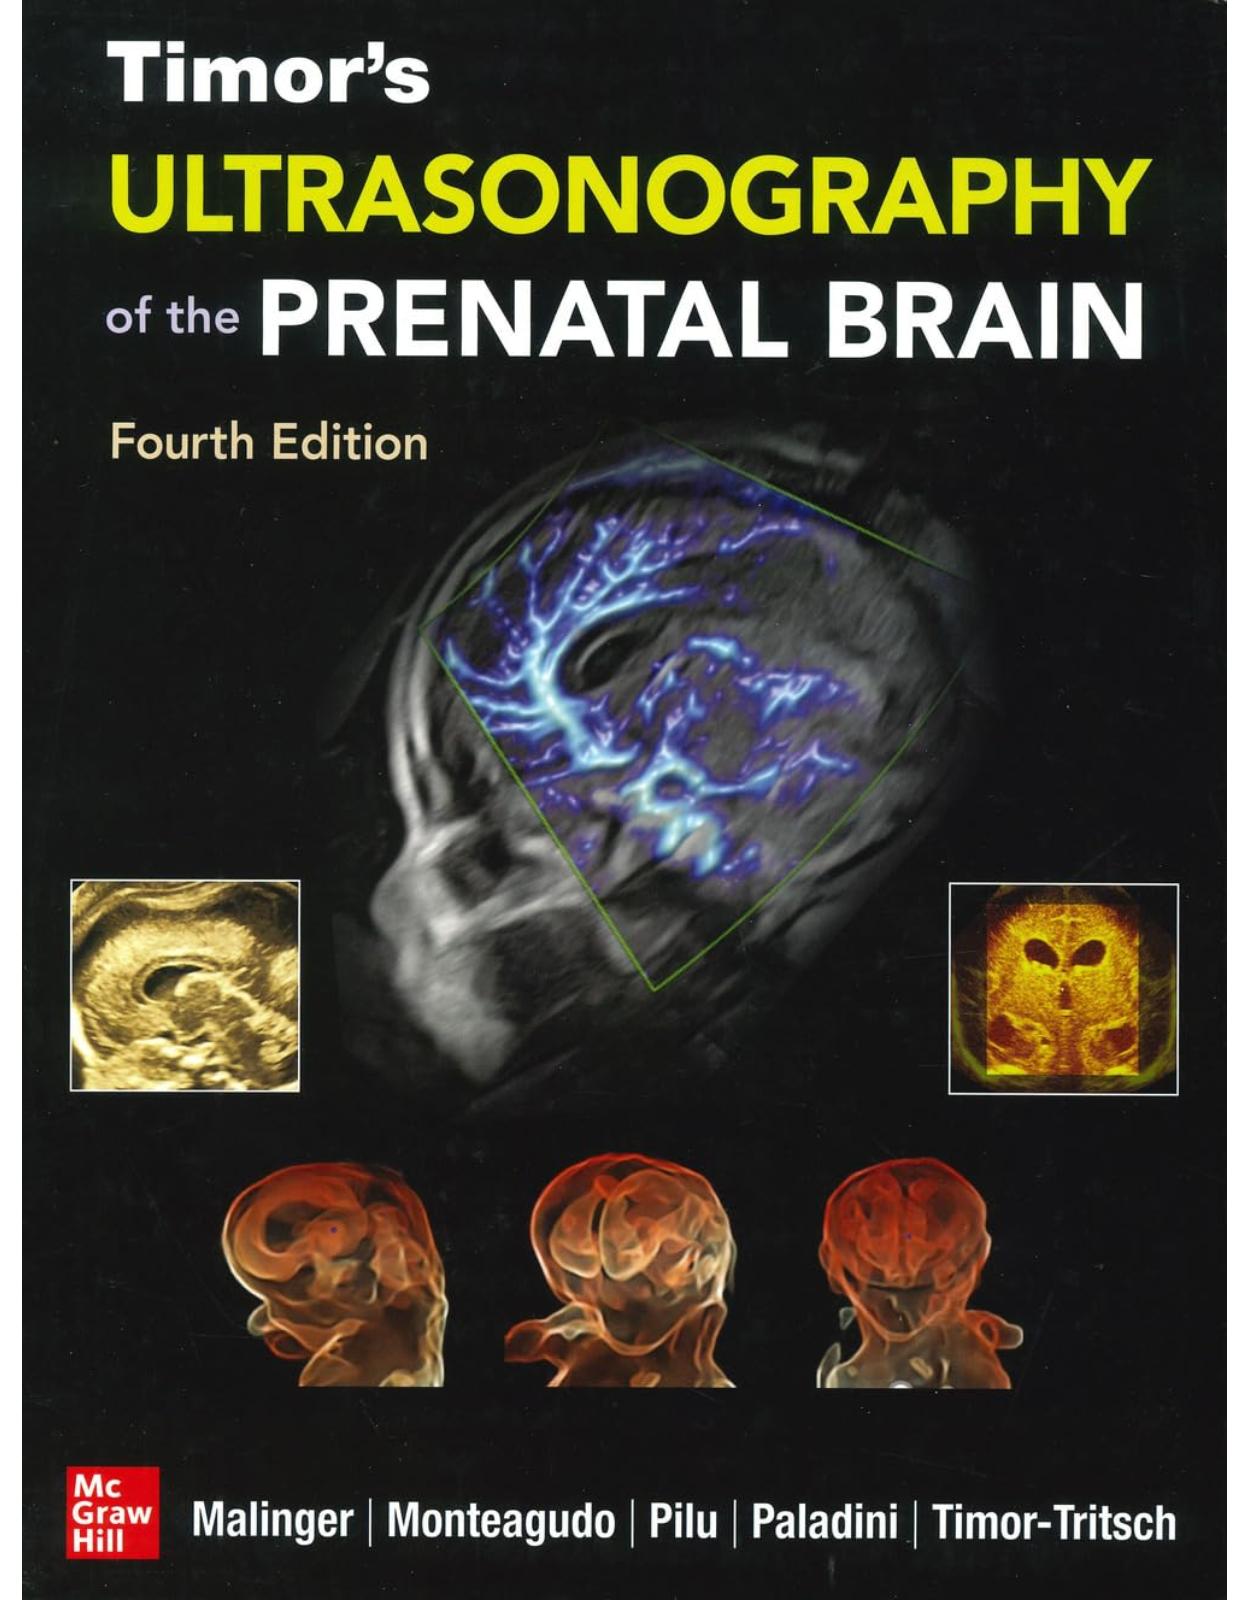 Timor’s Ultrasonography of the Prenatal Brain, Fourth Edition